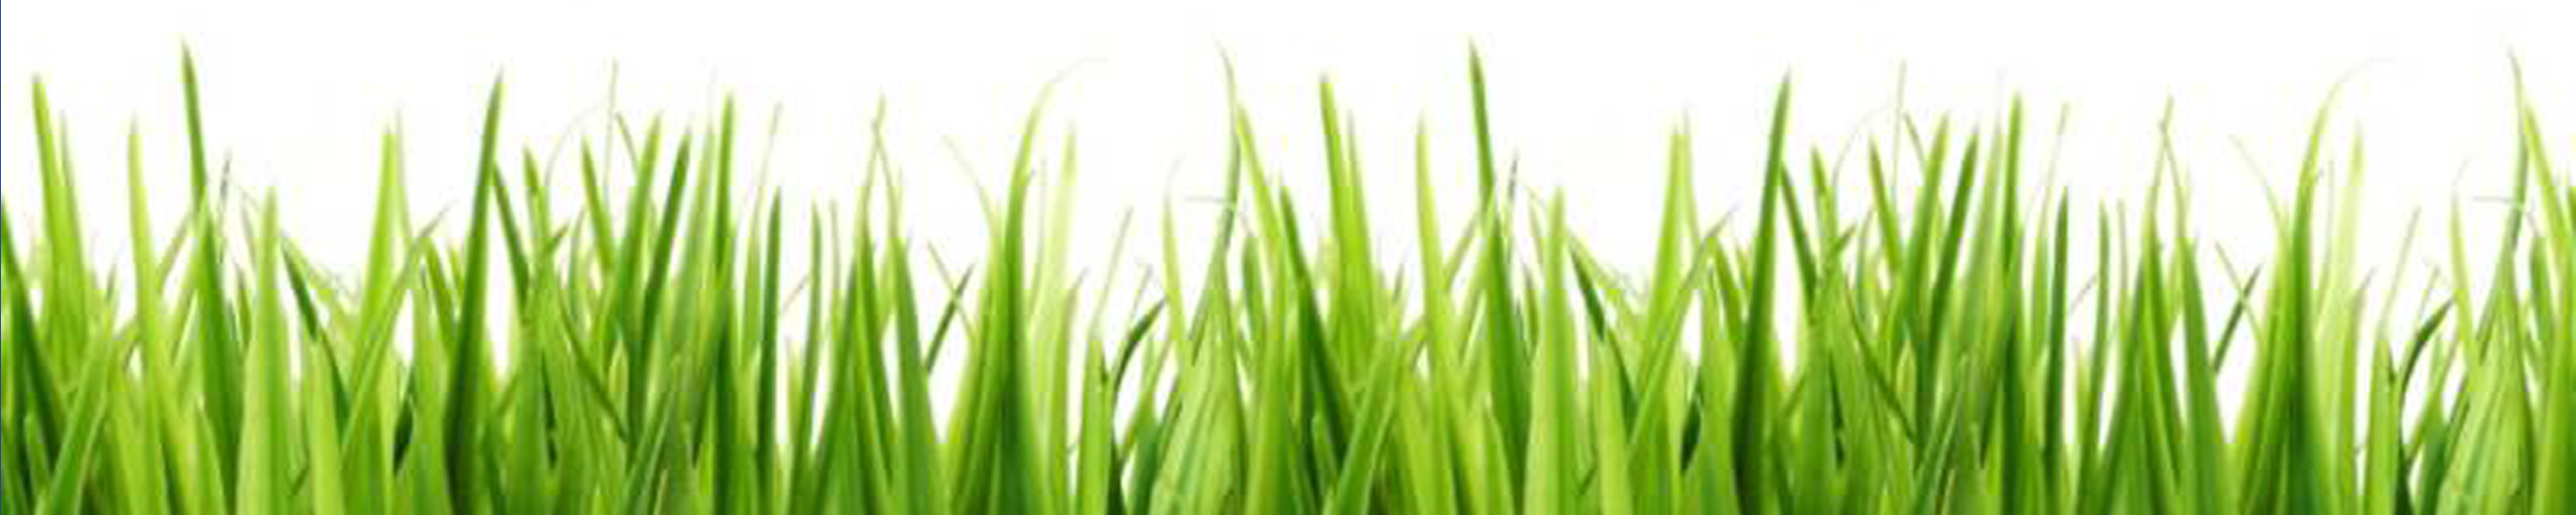 free clip art of grass - photo #20